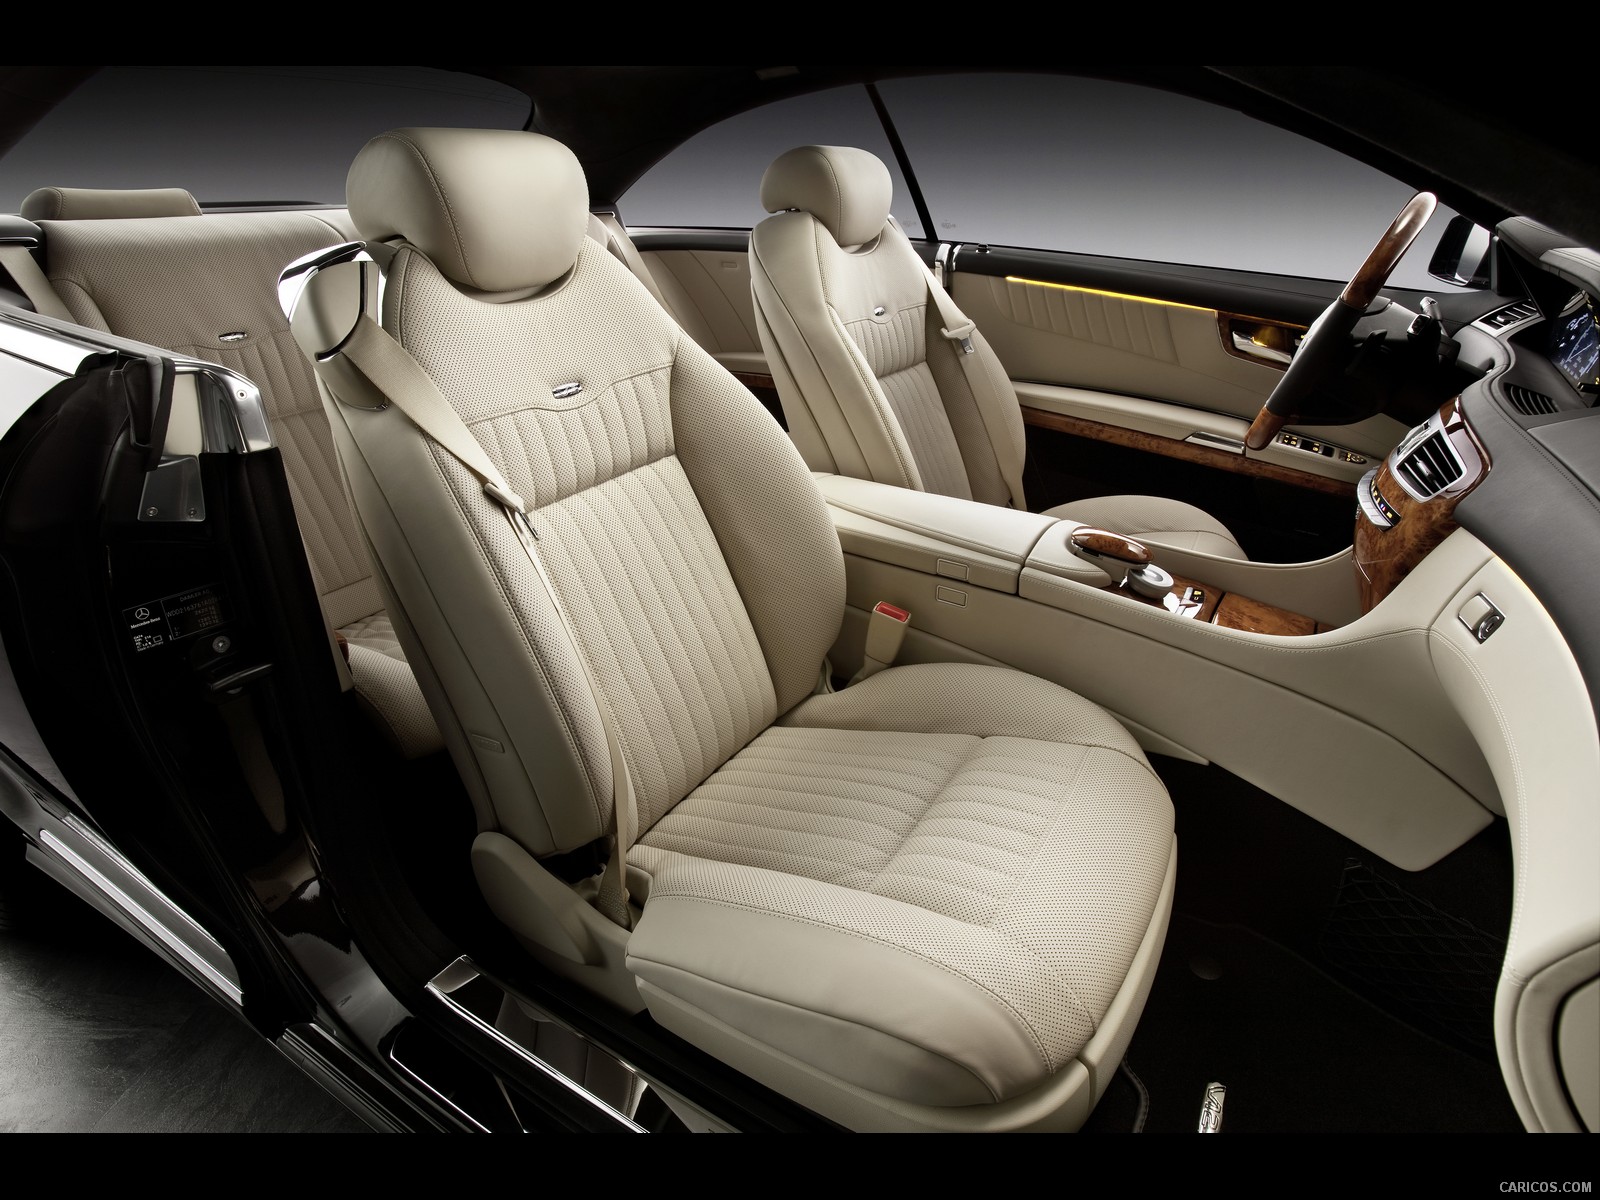 Mercedes Benz CL-Class (2011)  - Interior, Front Seats, #20 of 34